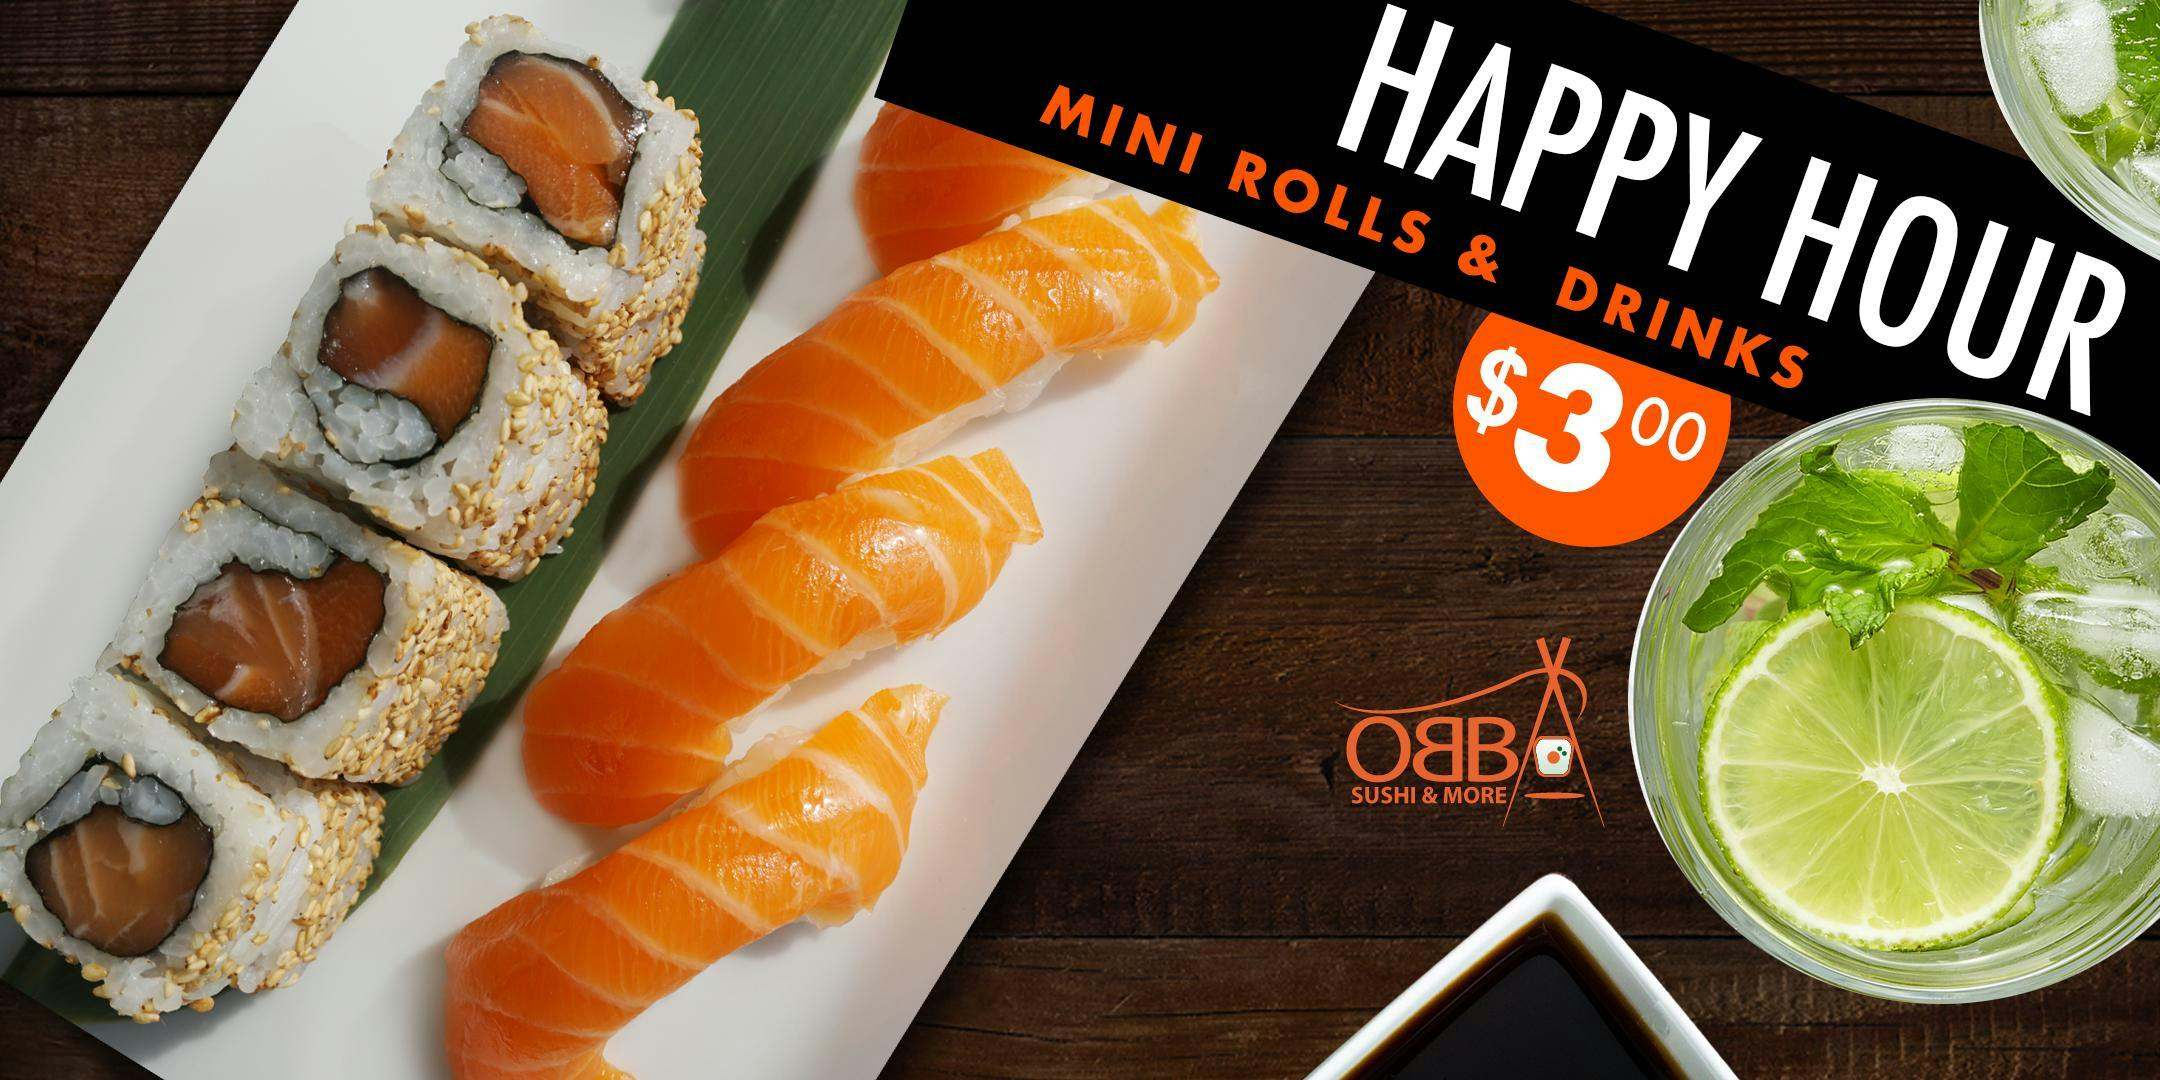 Happy Hour $3 @ Obba Sushi